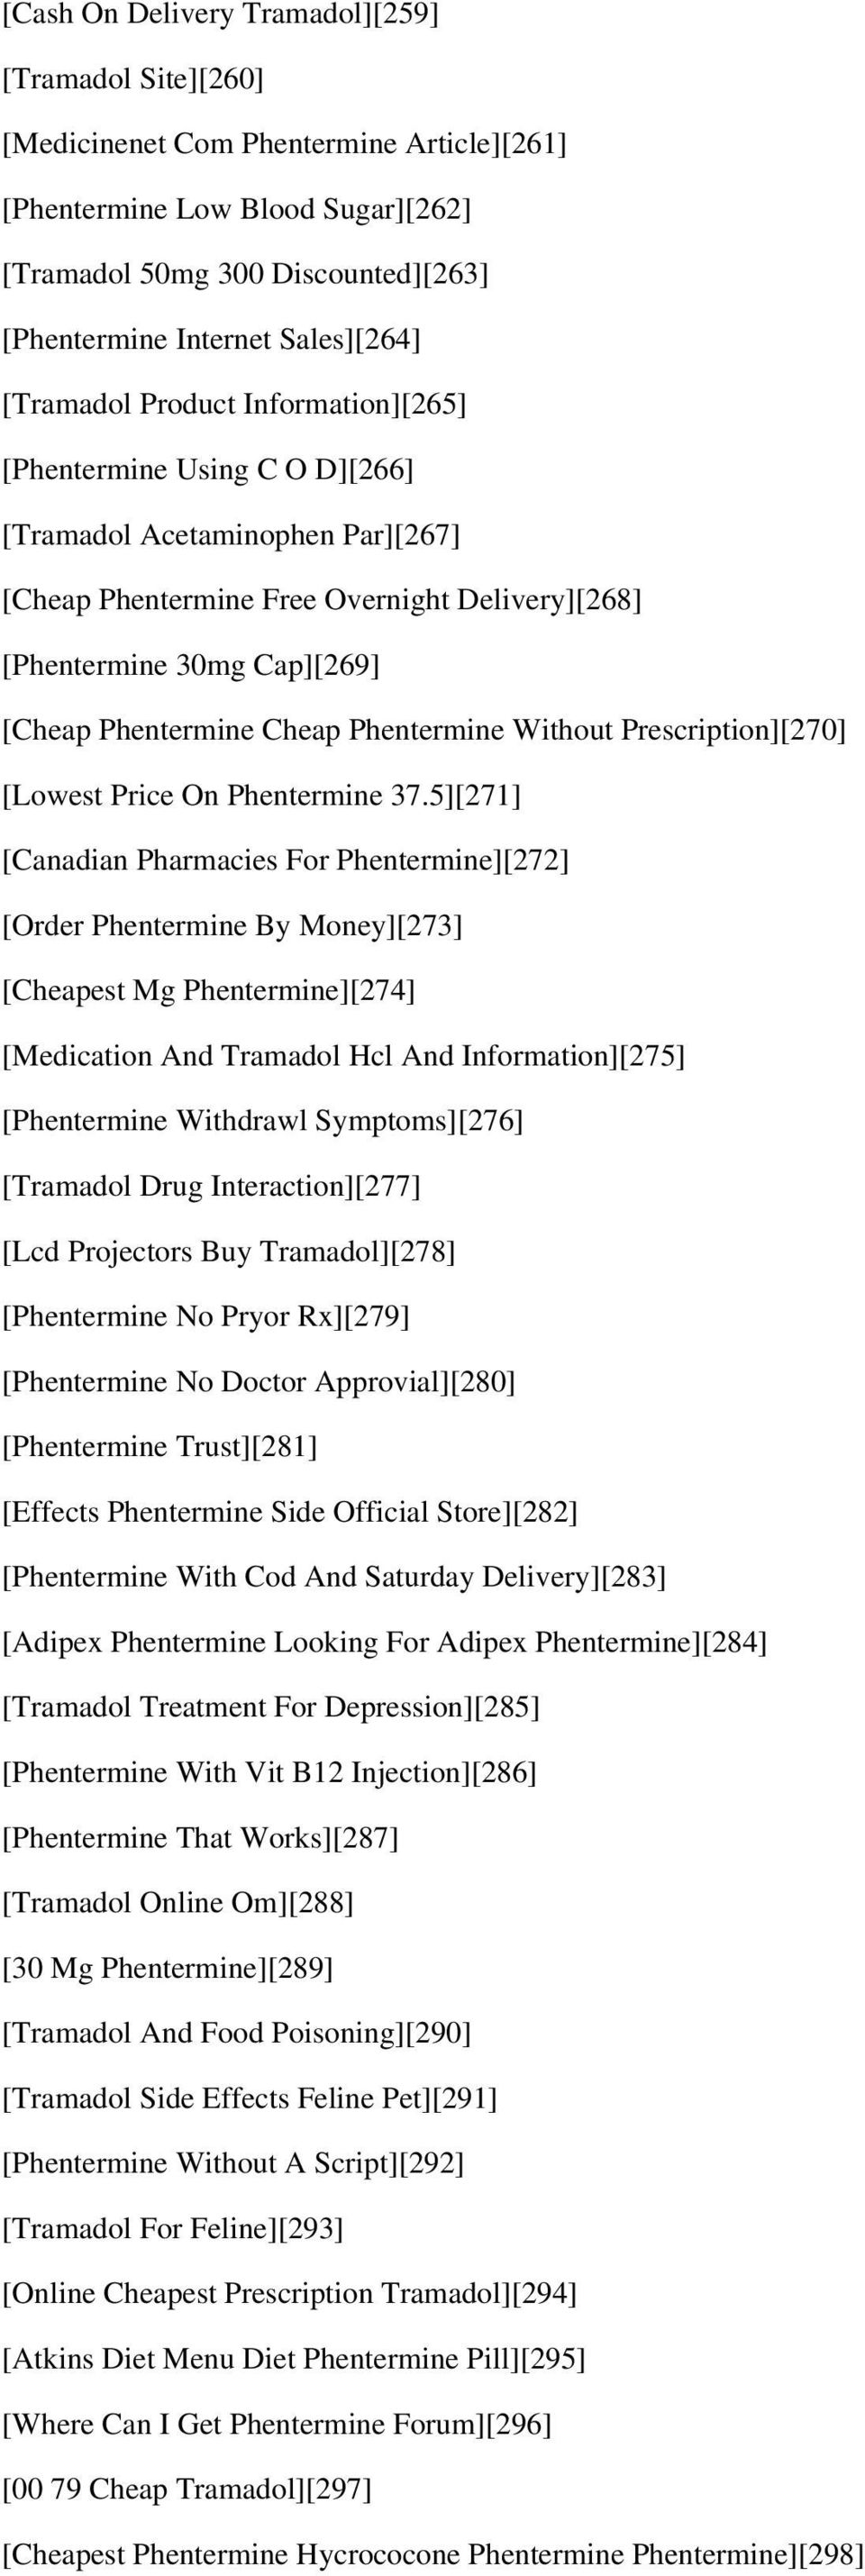 Phentermine Cheap Phentermine Without Prescription][270] [Lowest Price On Phentermine 37.